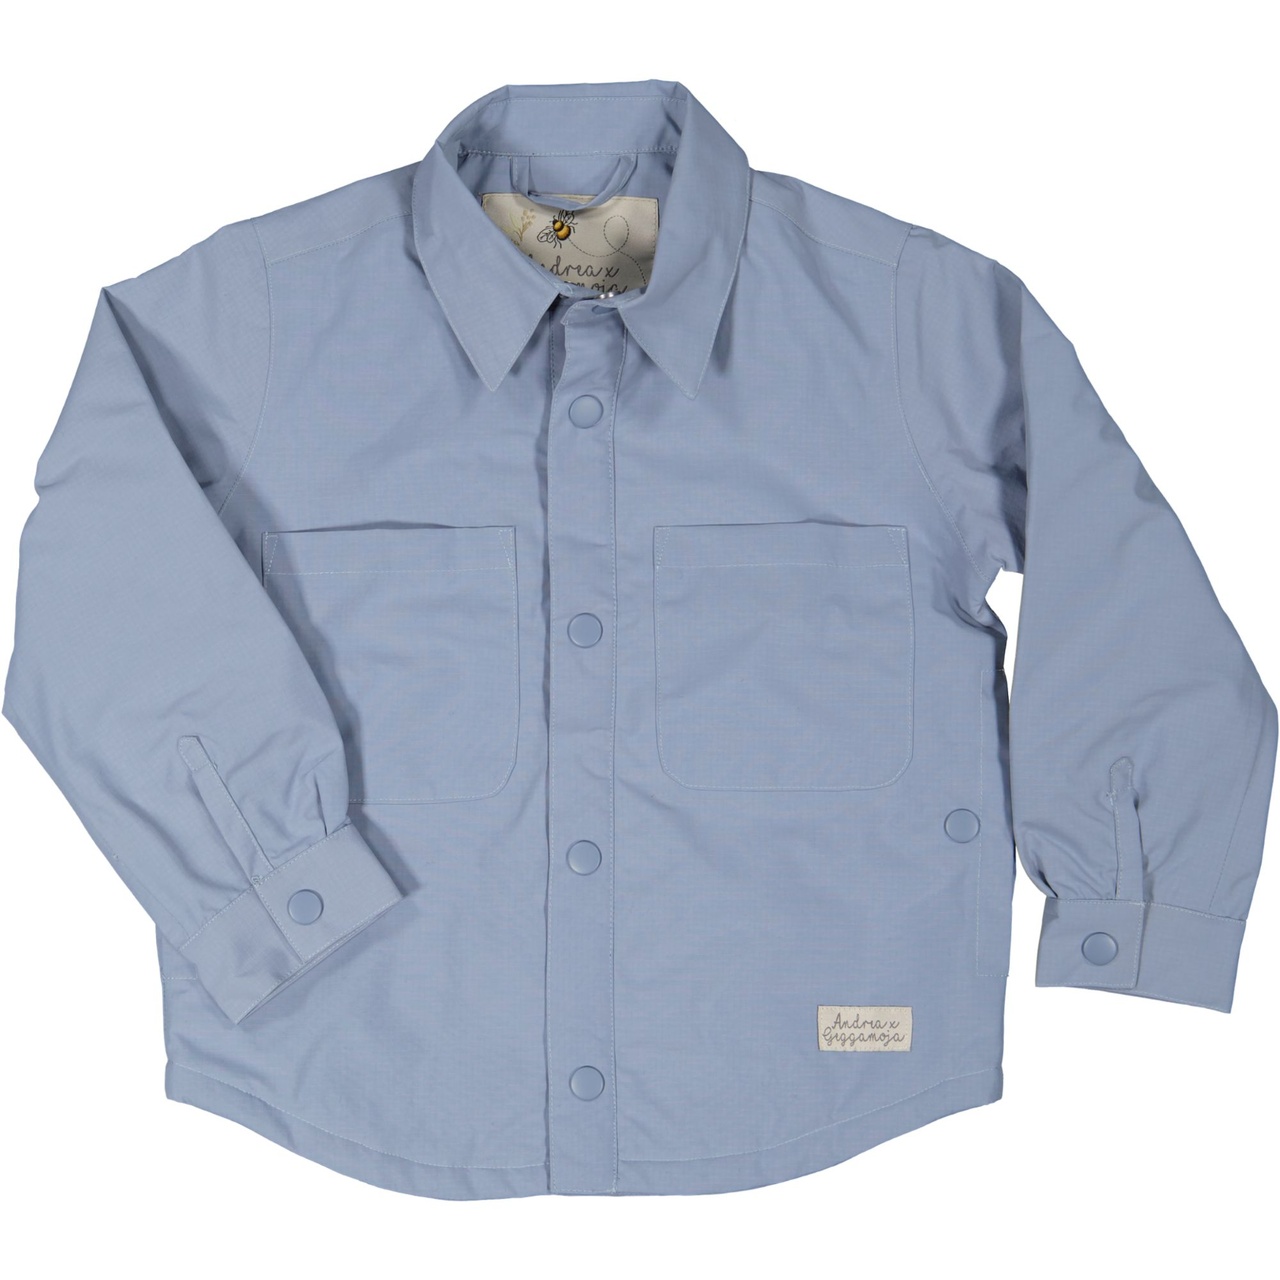 Shell Jacket/Over shirt Dusty Blue 86/92